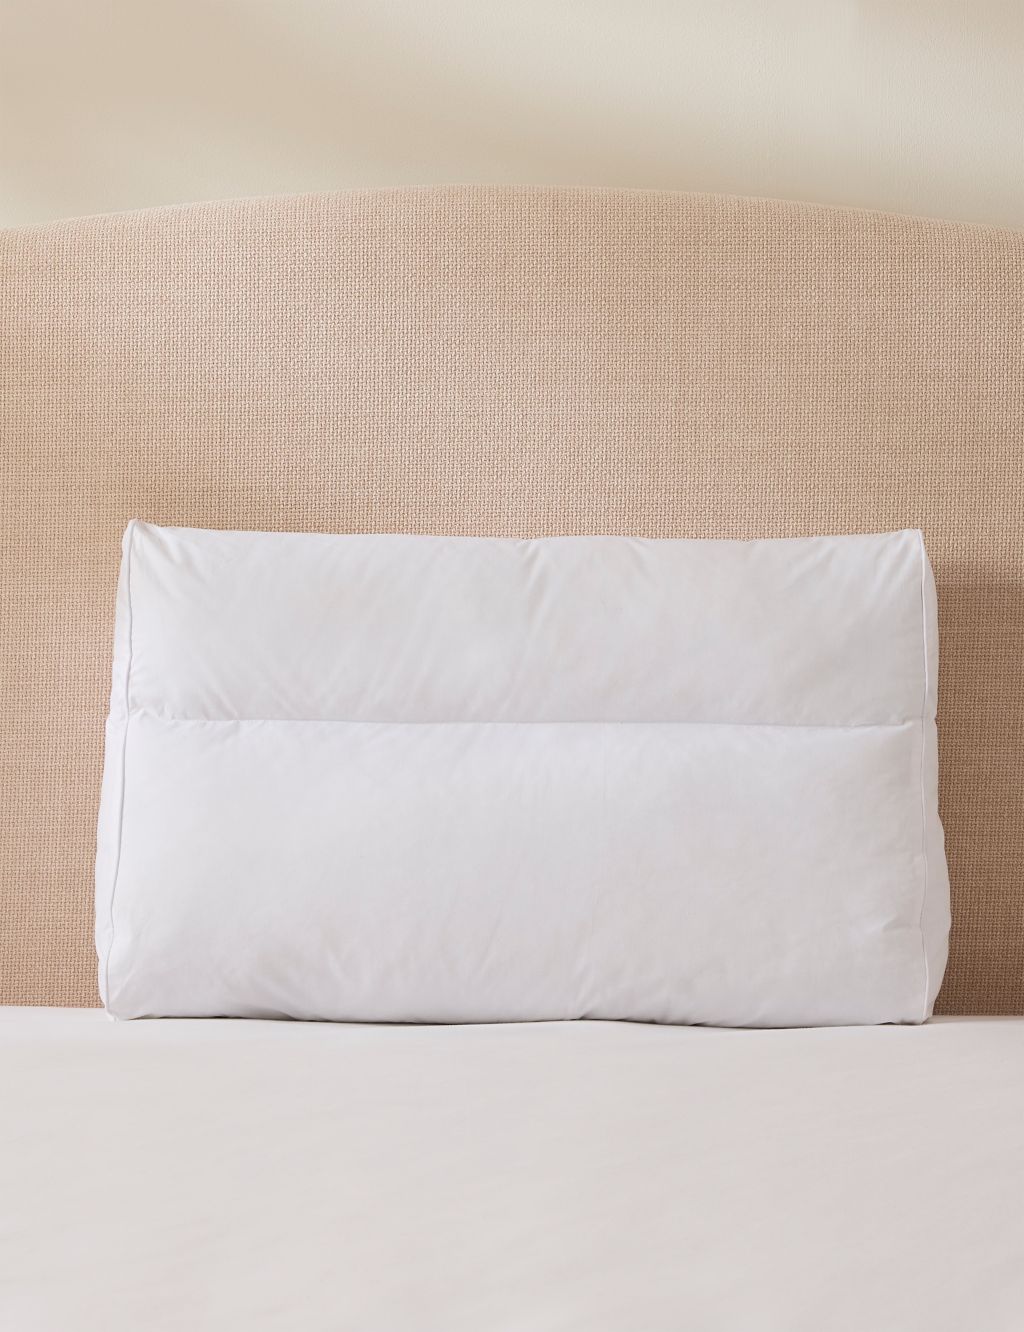 Sleep Solutions Contour Pillow image 3